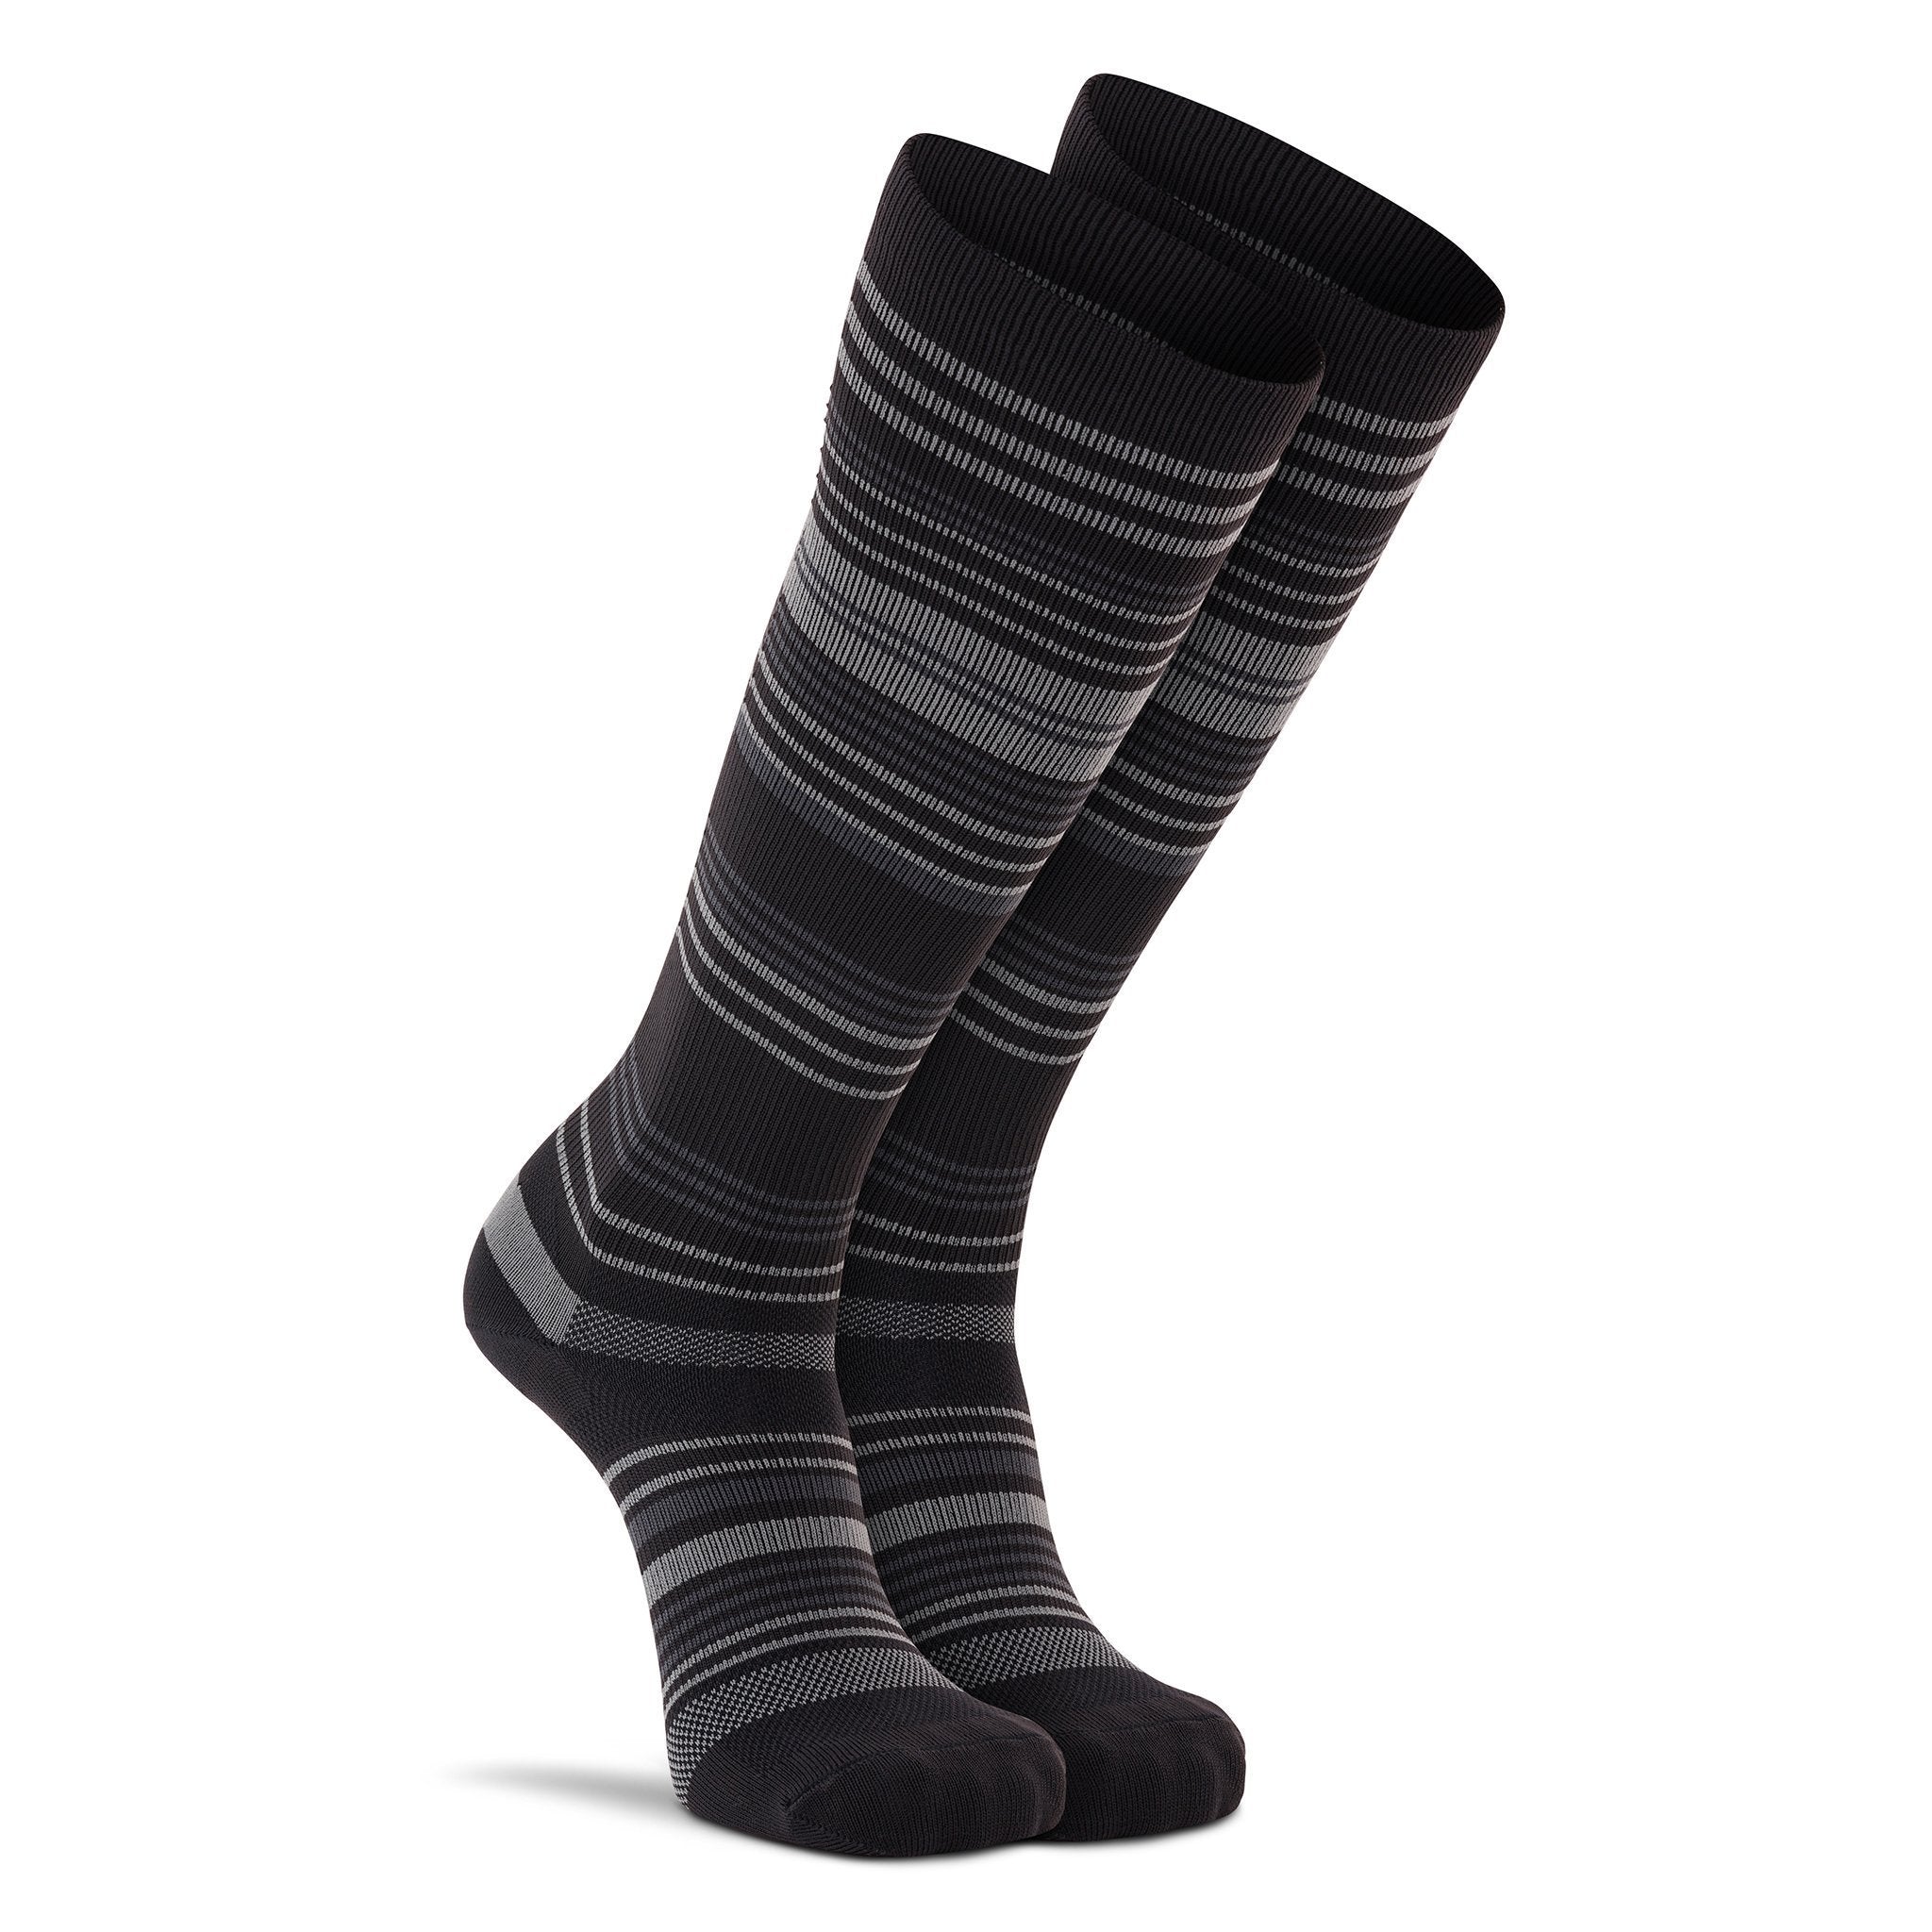 Sticker Sox Ankle Non Slip Socks - Black (per pair)